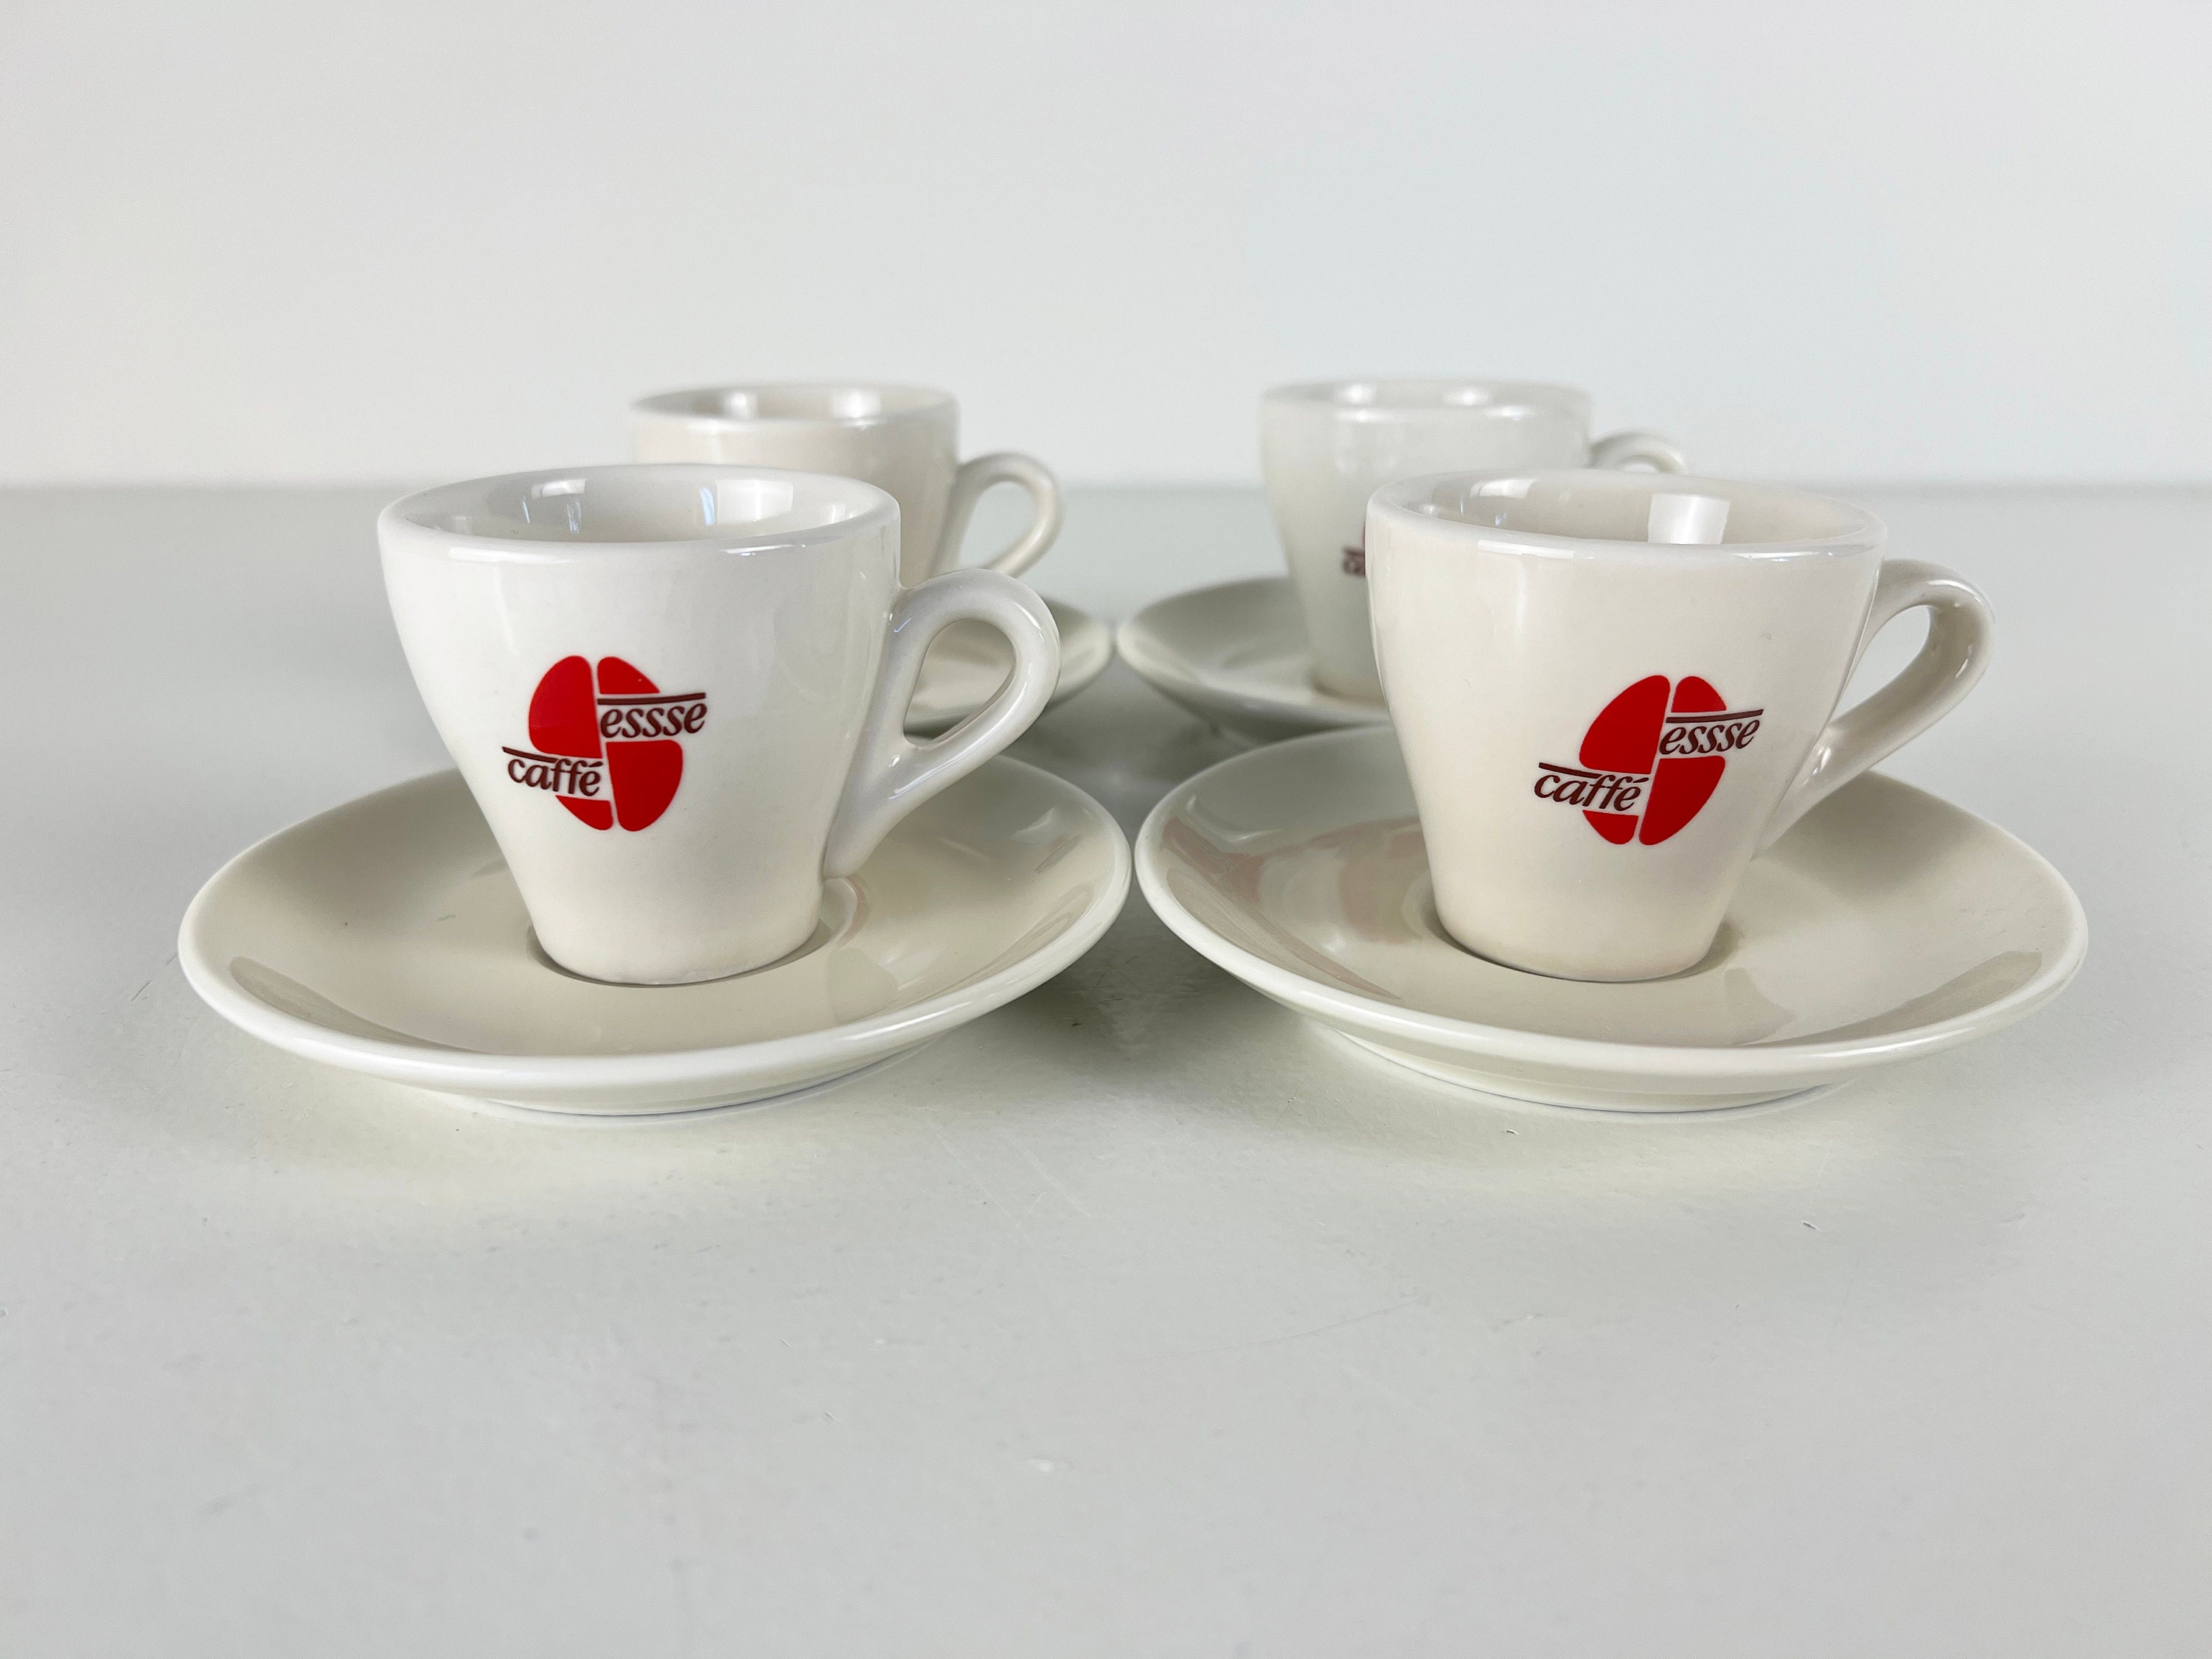 Set of 2 Vintage Italian Espresso Cups